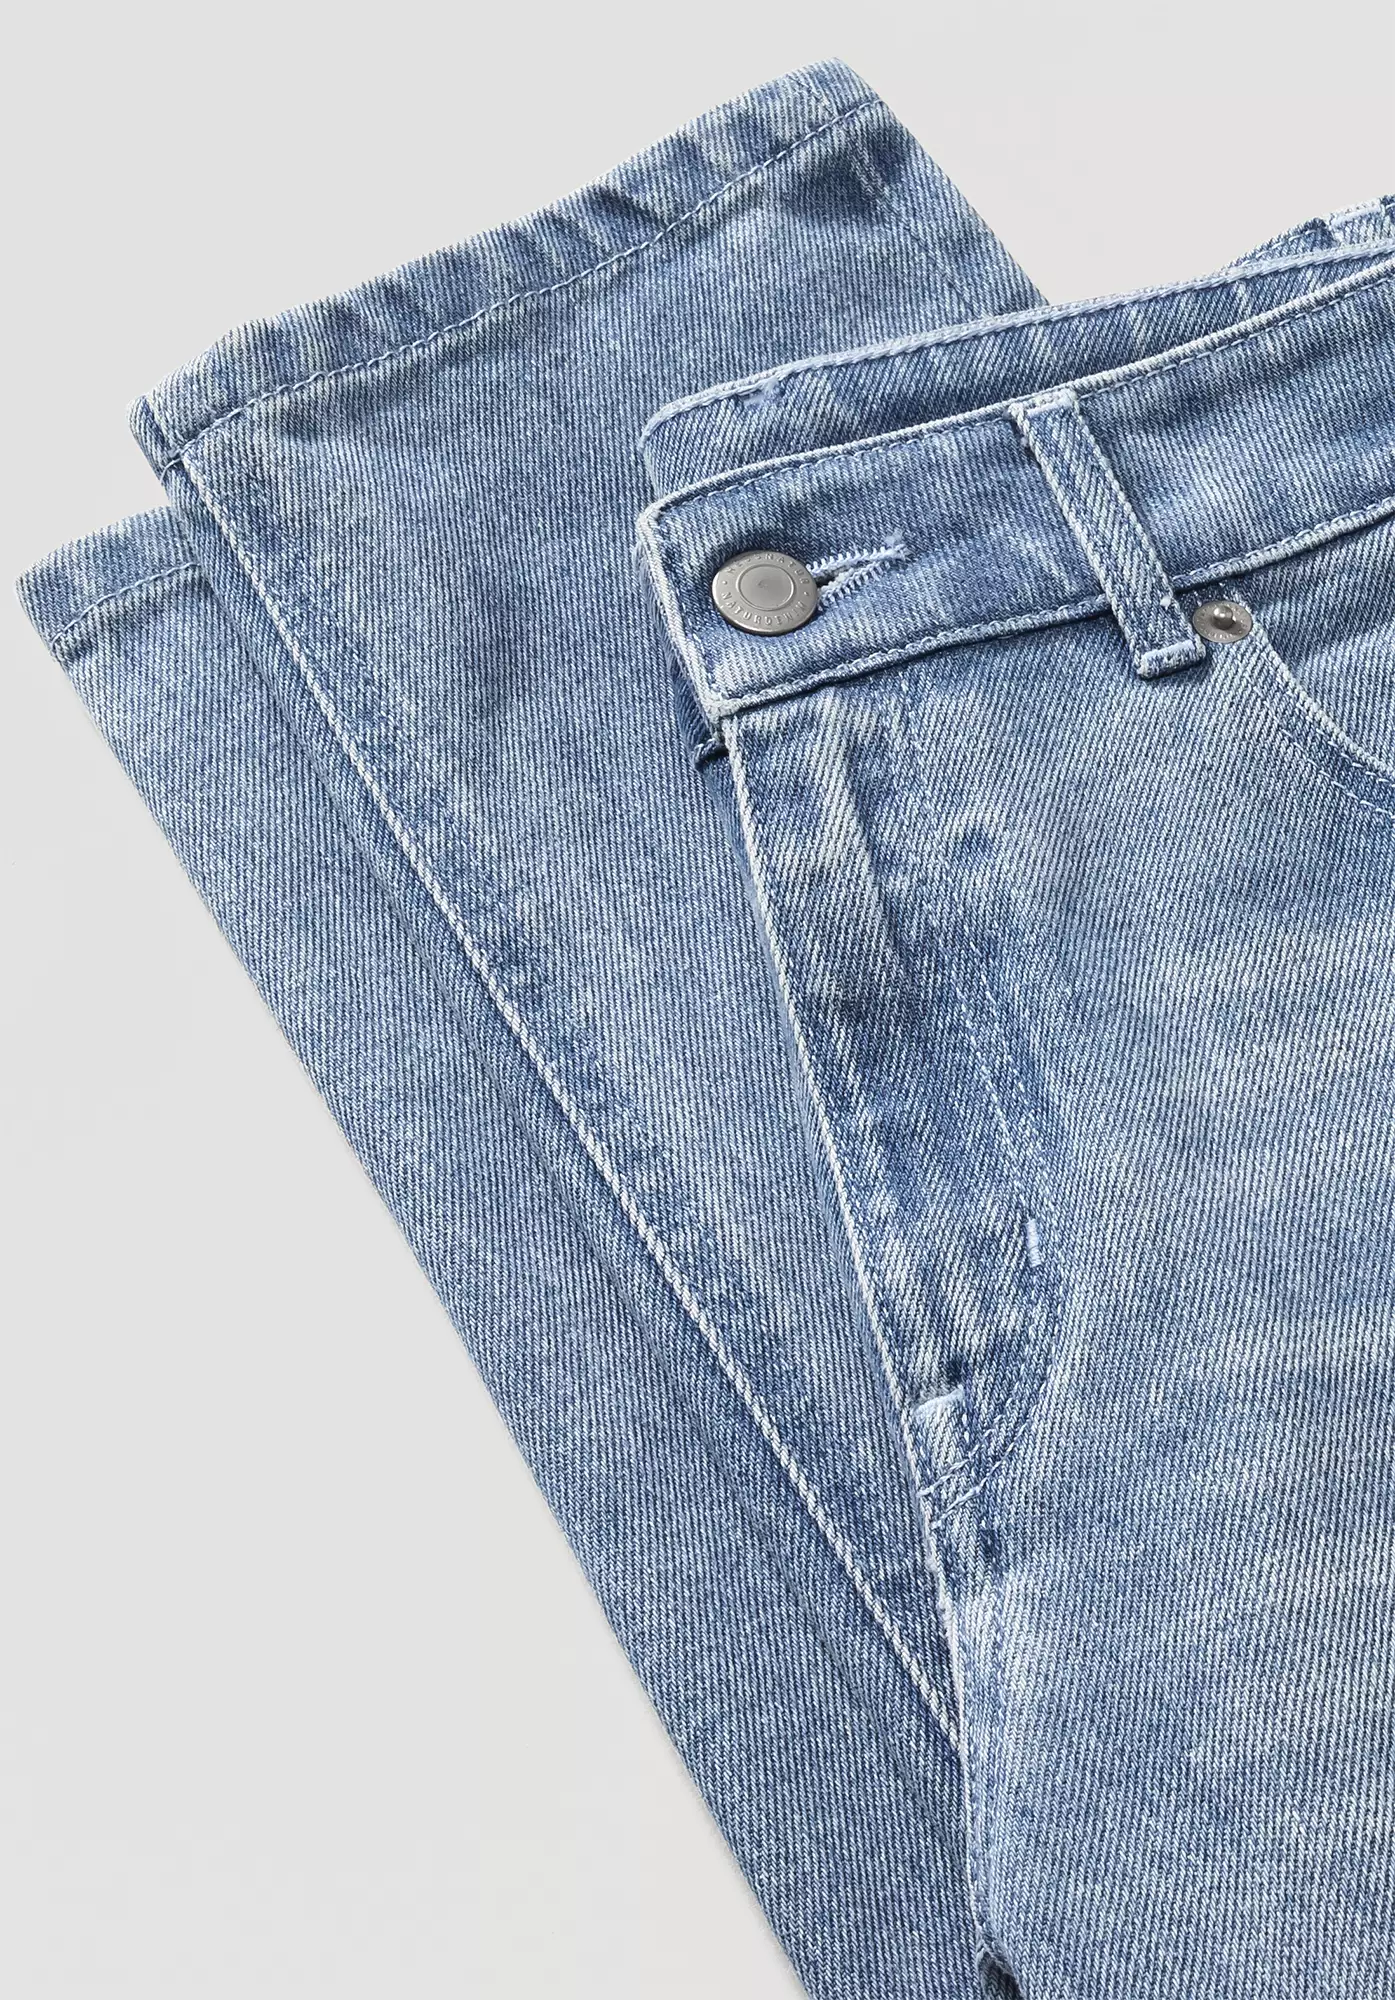 Hanna Mom Fit jeans made of organic denim - 5